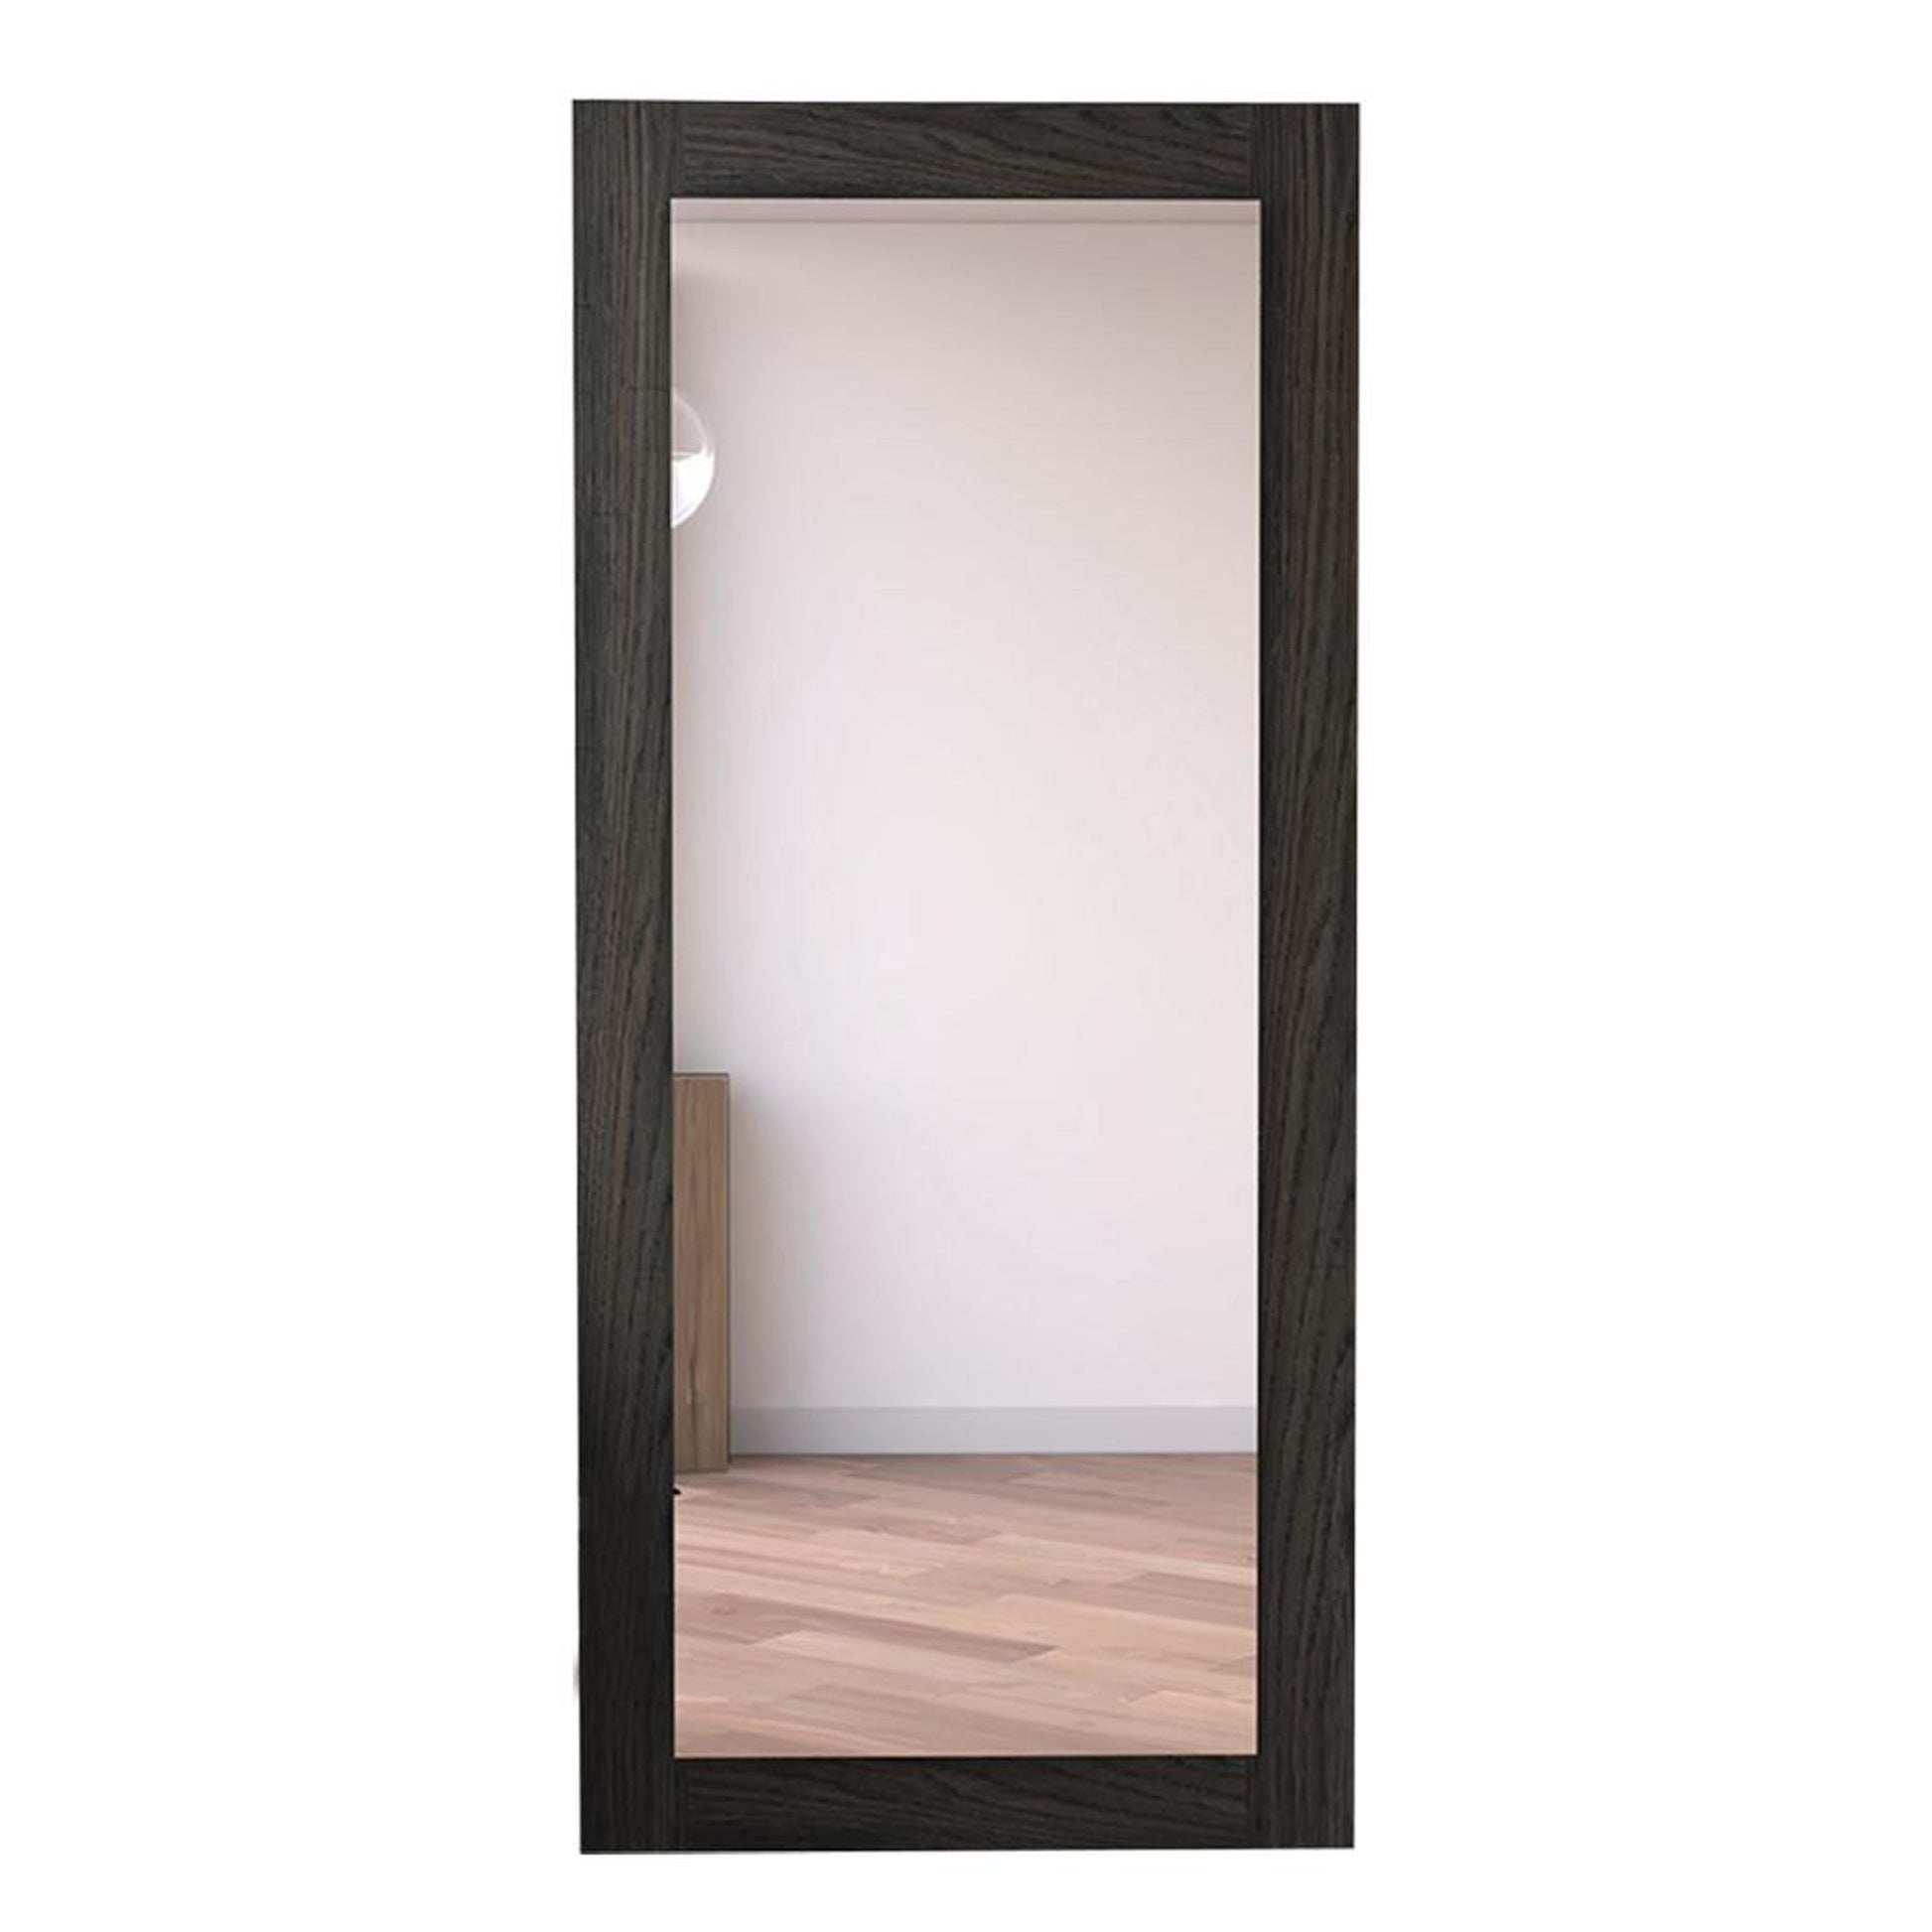 TUHOME Flektar Marsala 28" x 63" Rectangular Framed Wall-Mounted Mirror in Espresso Wood Finish